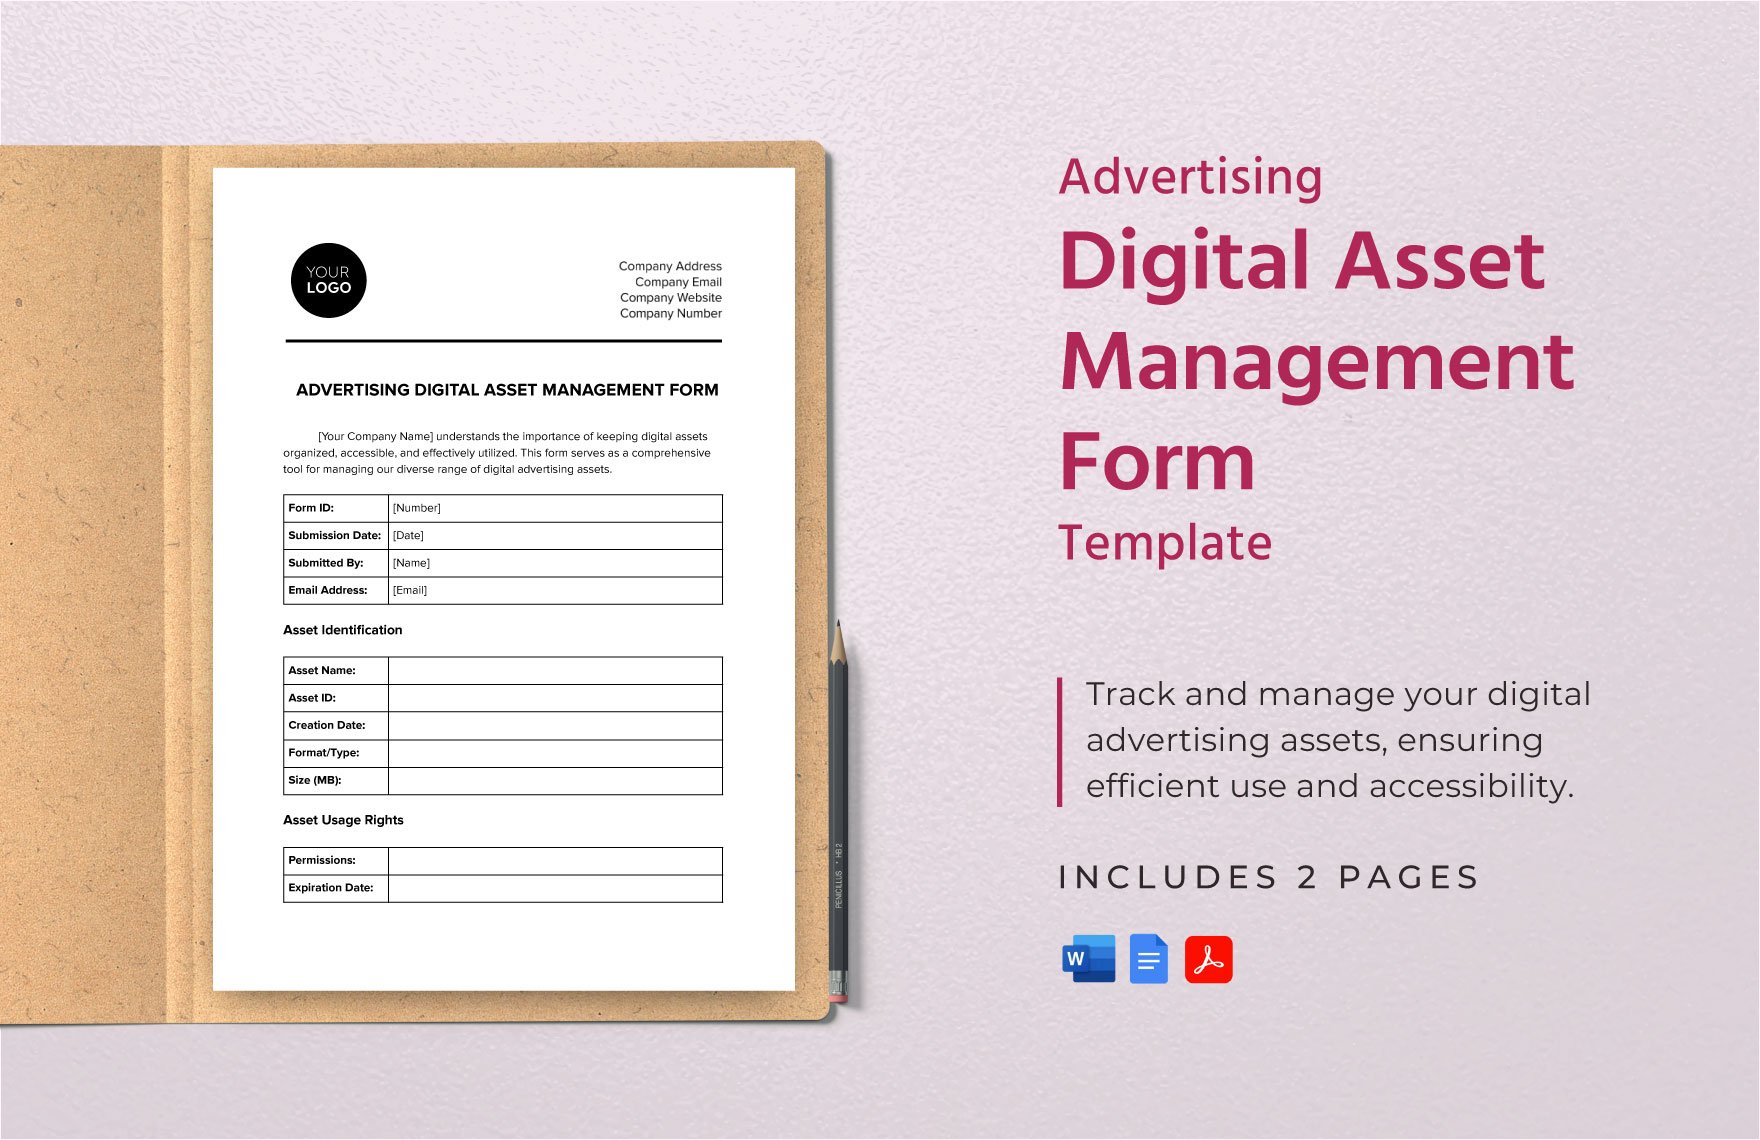 Advertising Digital Asset Management Form Template in Word, Google Docs, PDF